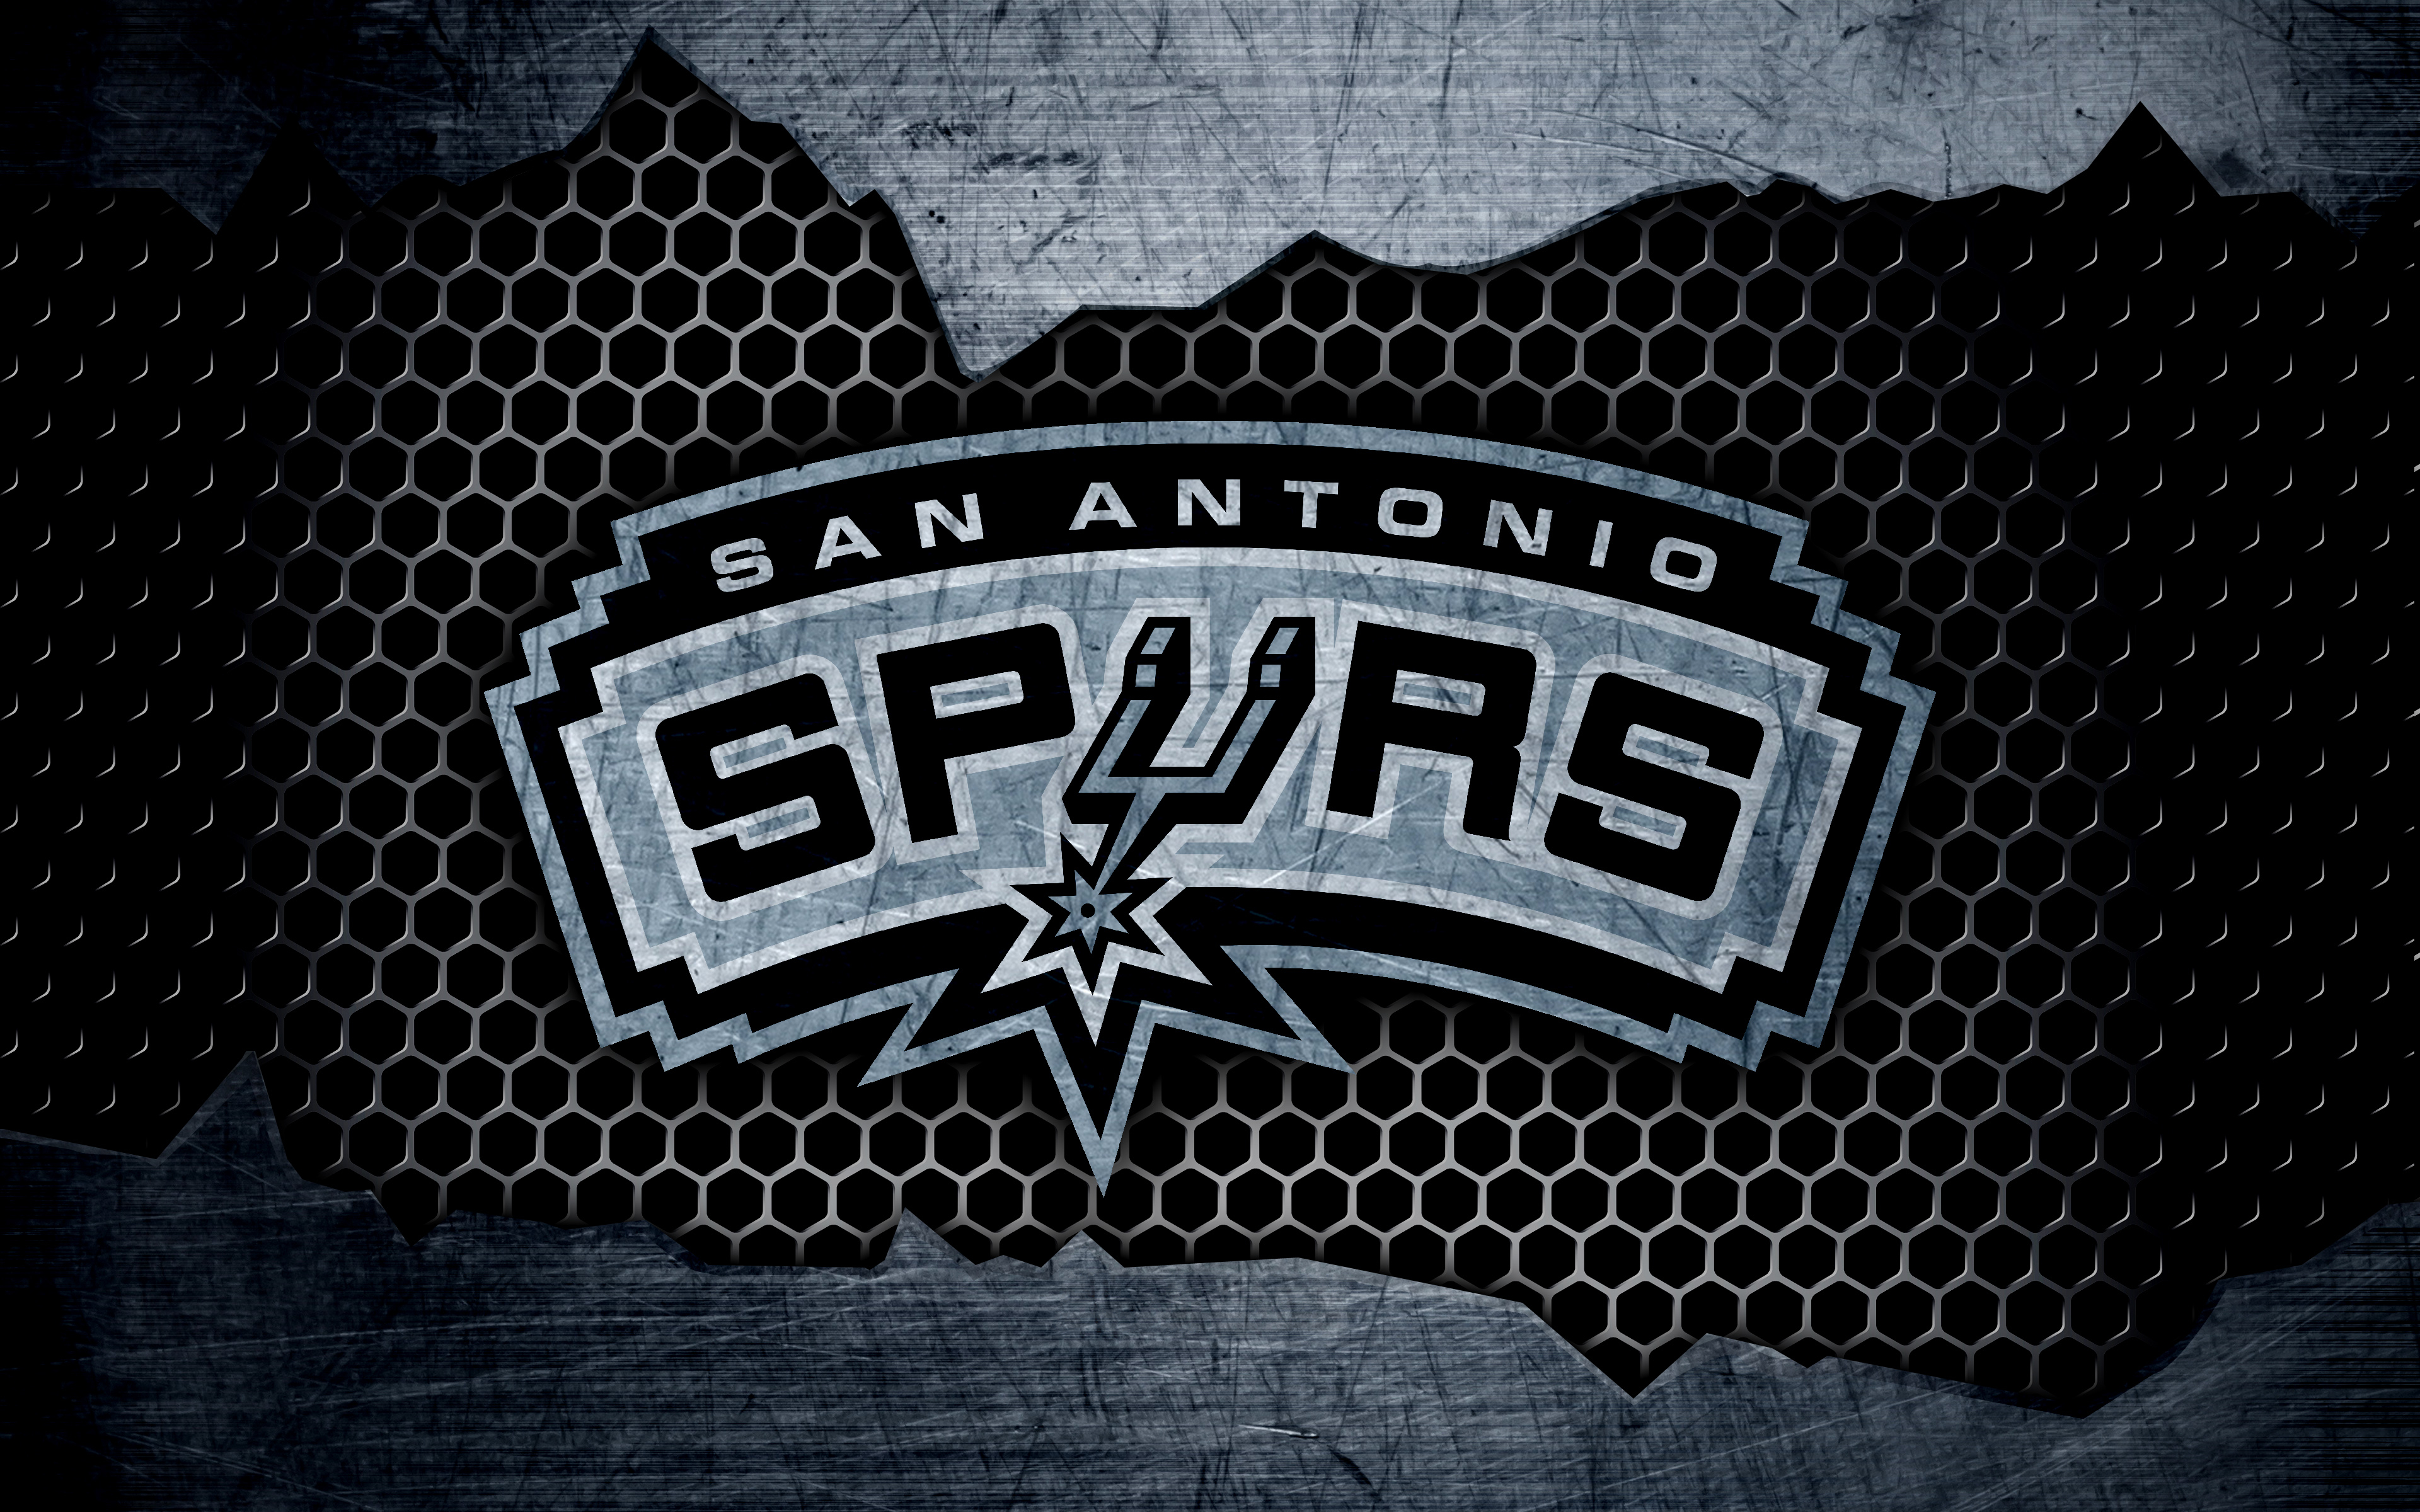 San Antonio Spurs Projects  Photos, videos, logos, illustrations